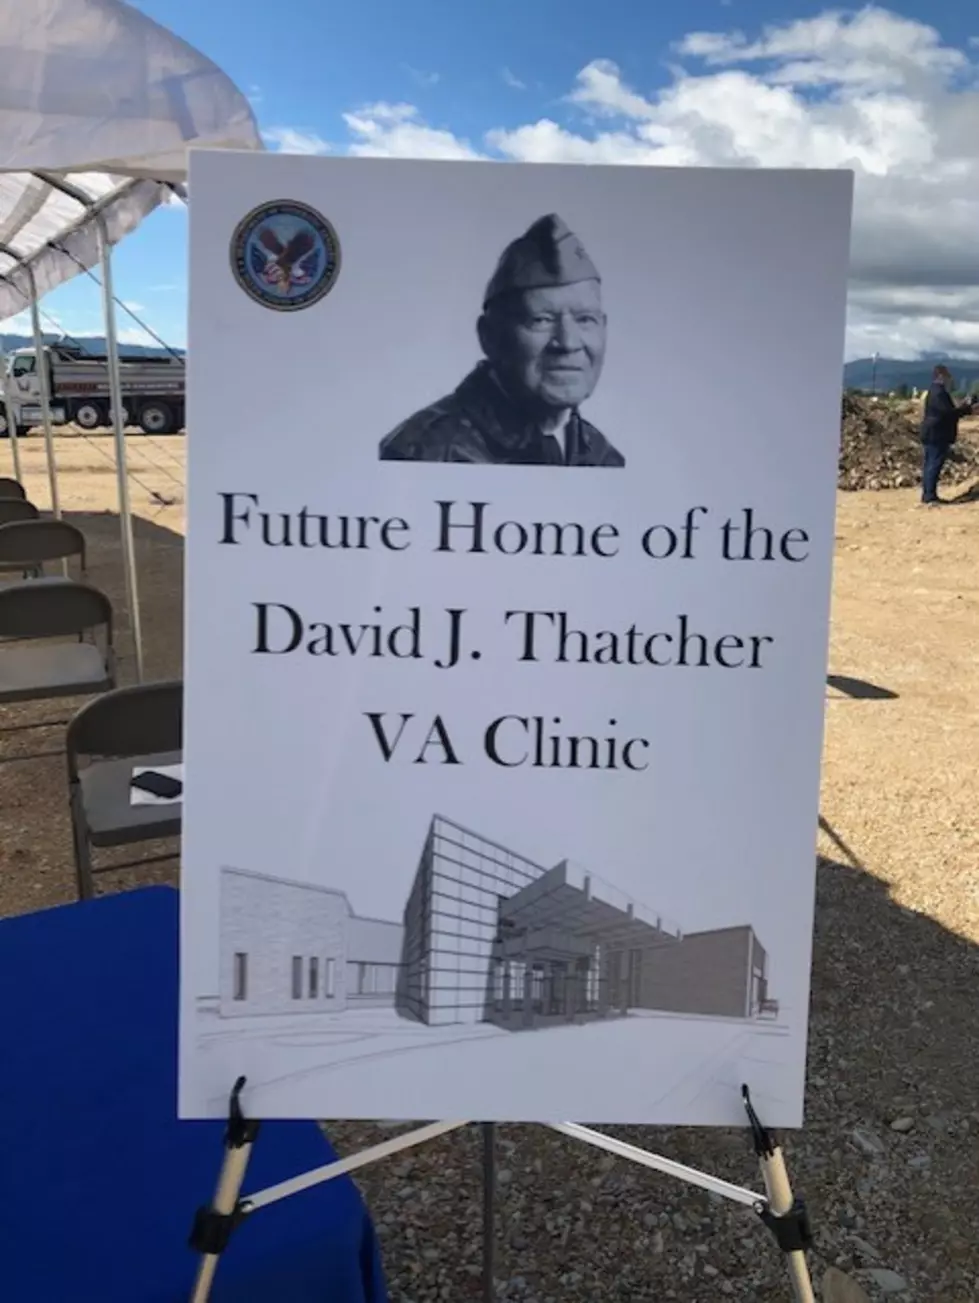 David J. Thatcher VA Clinic Groundbreaking in Missoula